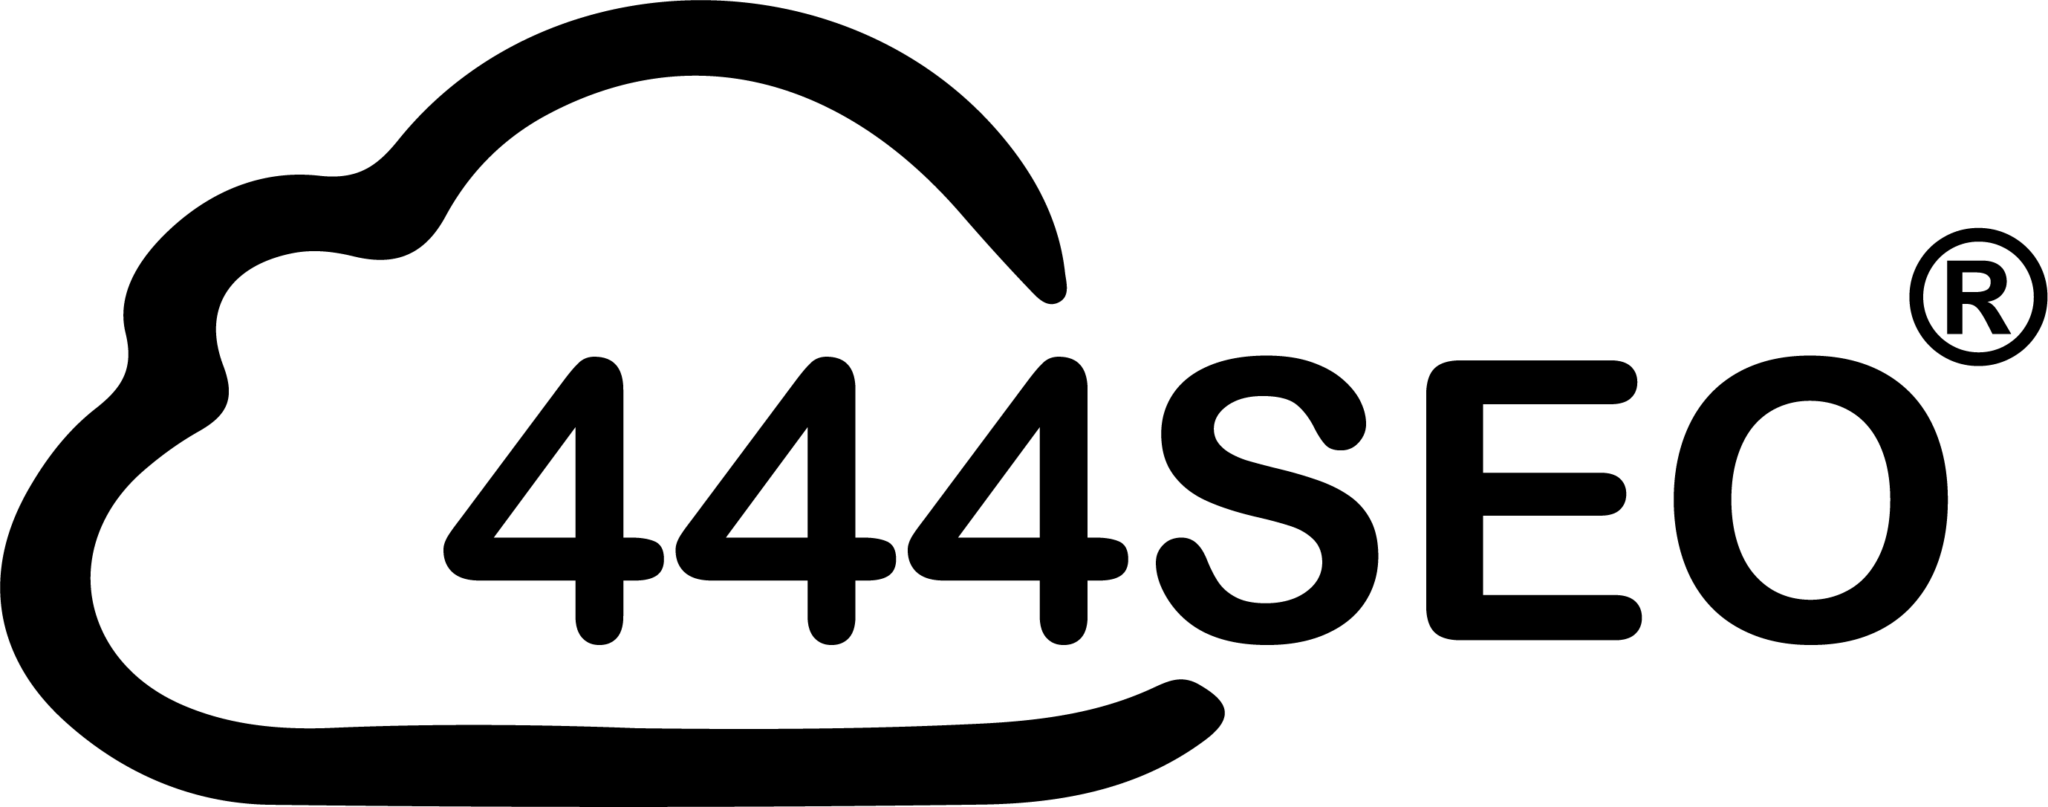 444SEO-Logo